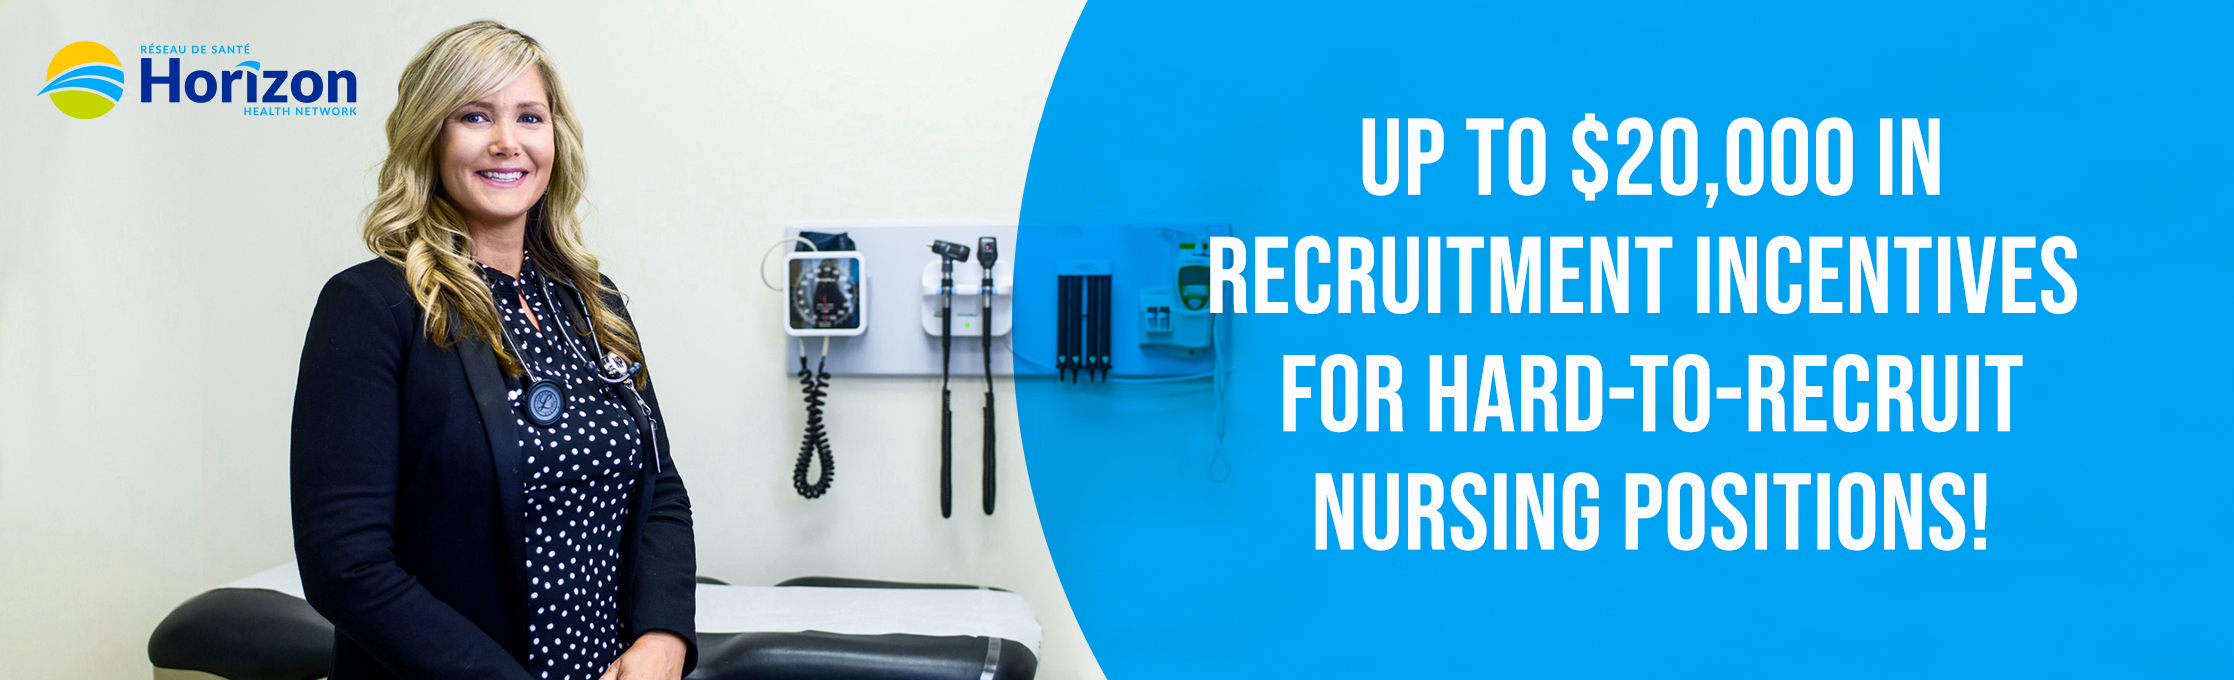 Nursing - Horizon Health Network